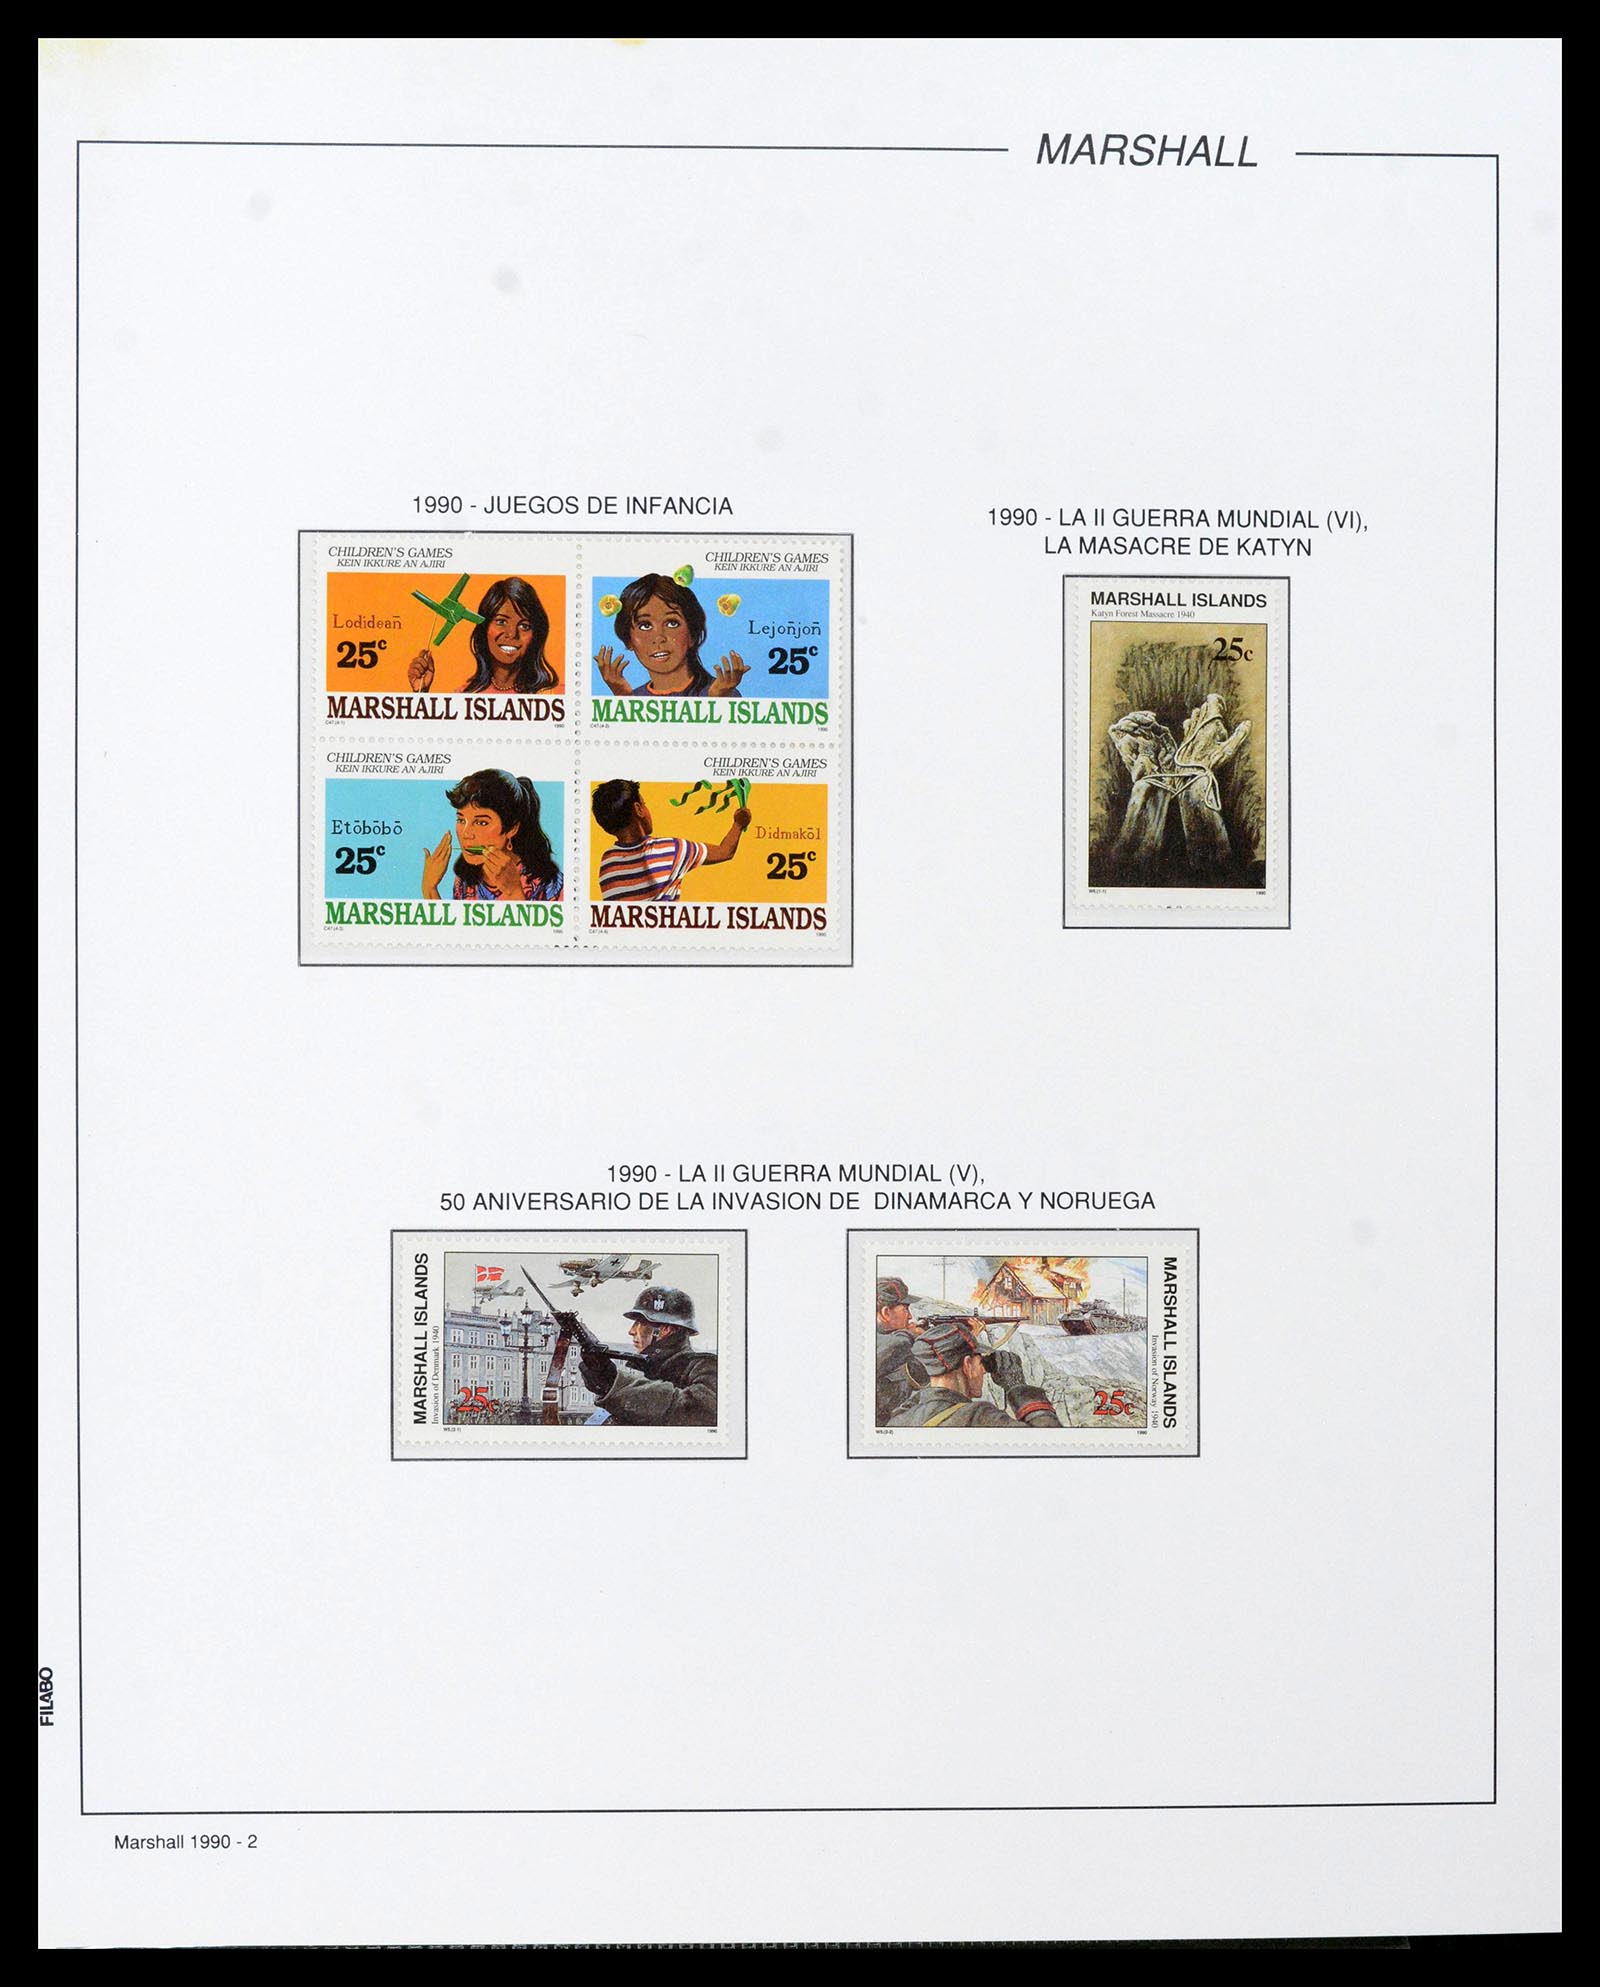 39222 0145 - Stamp collection 39222 Palau, Micronesia and Marshall islands 1980-1995.